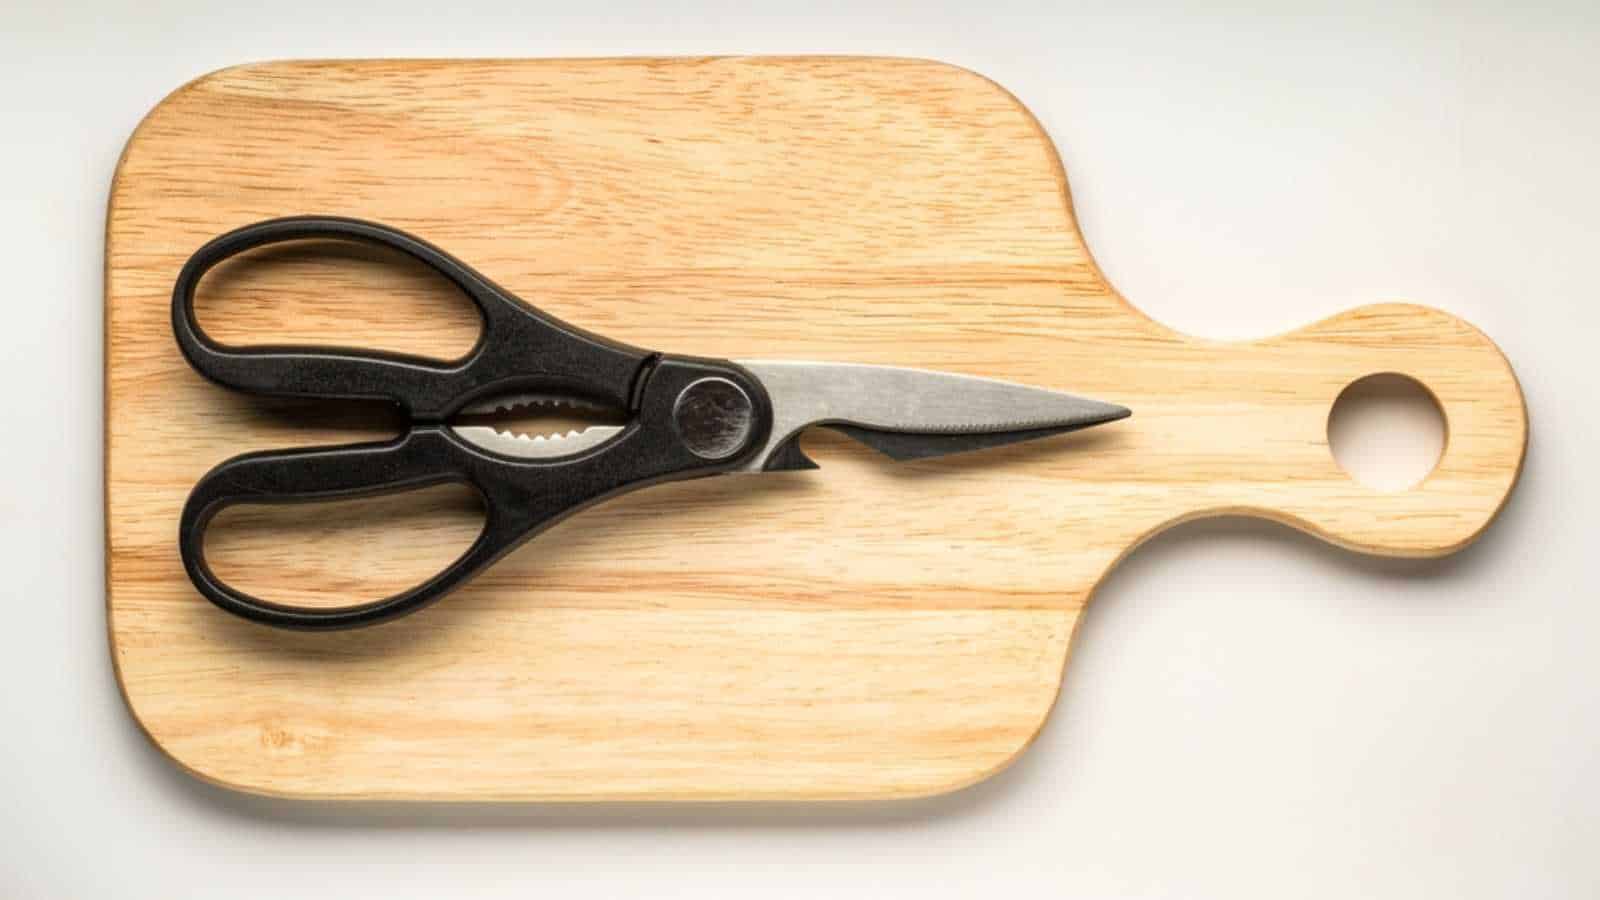 Cutting Board and kitche shears